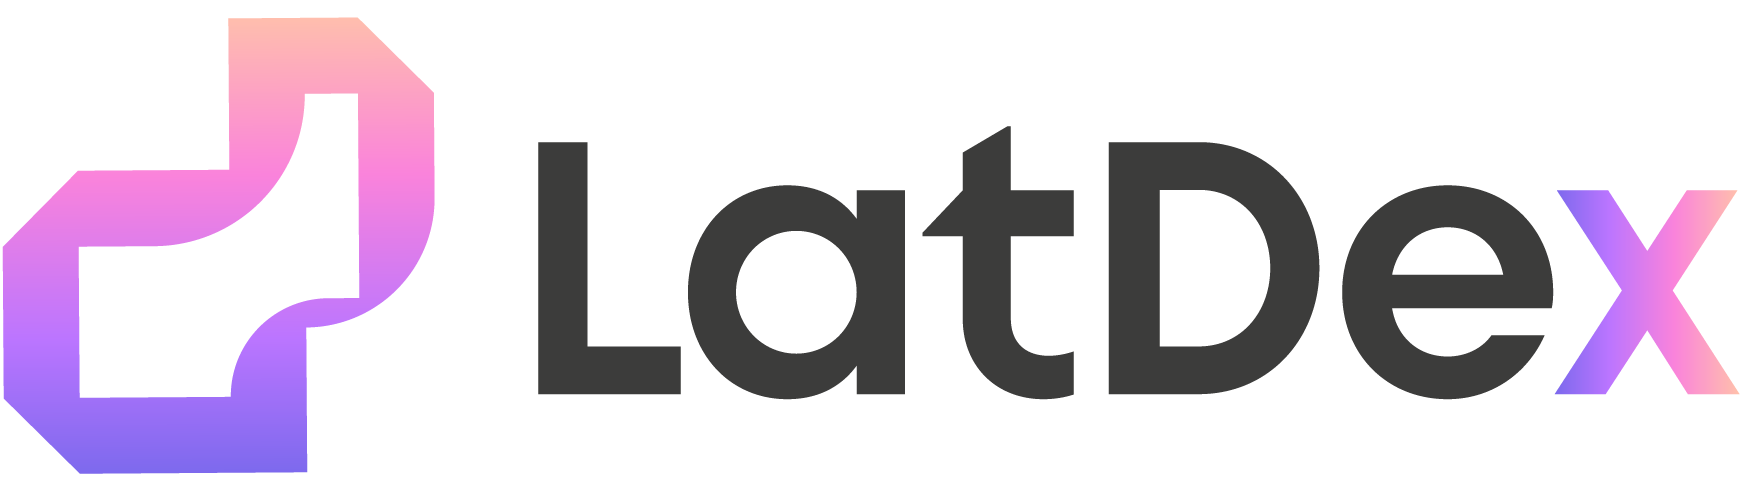 LatDex